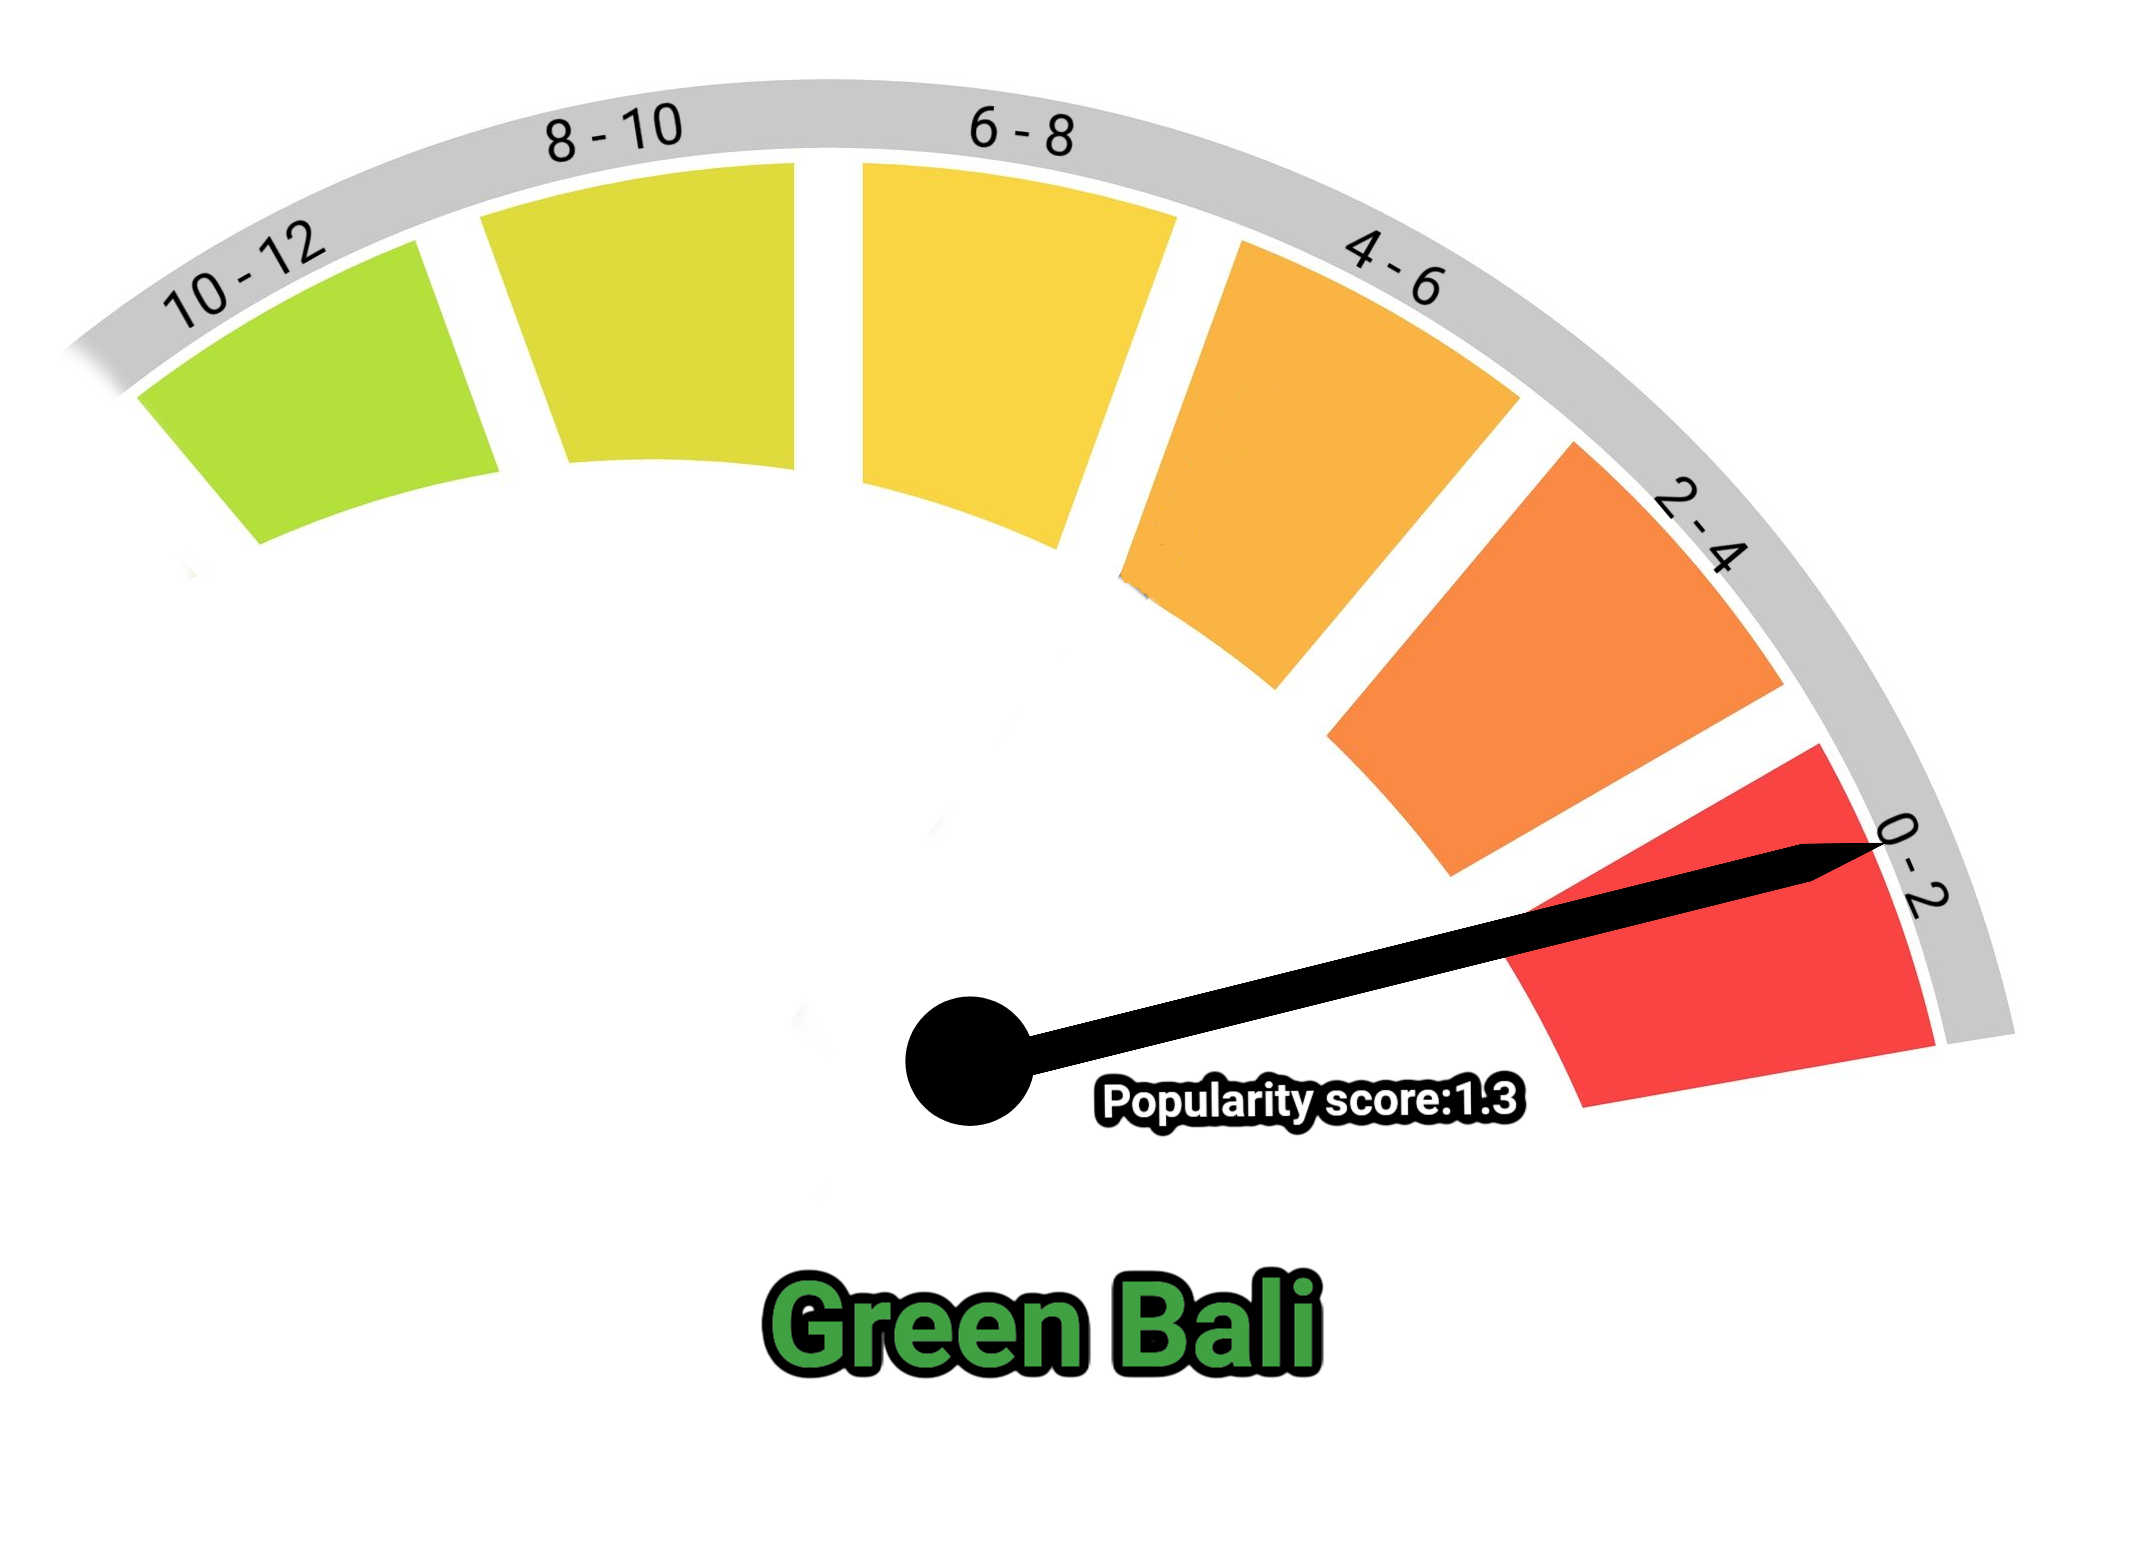 image of green bali kratom popularity score